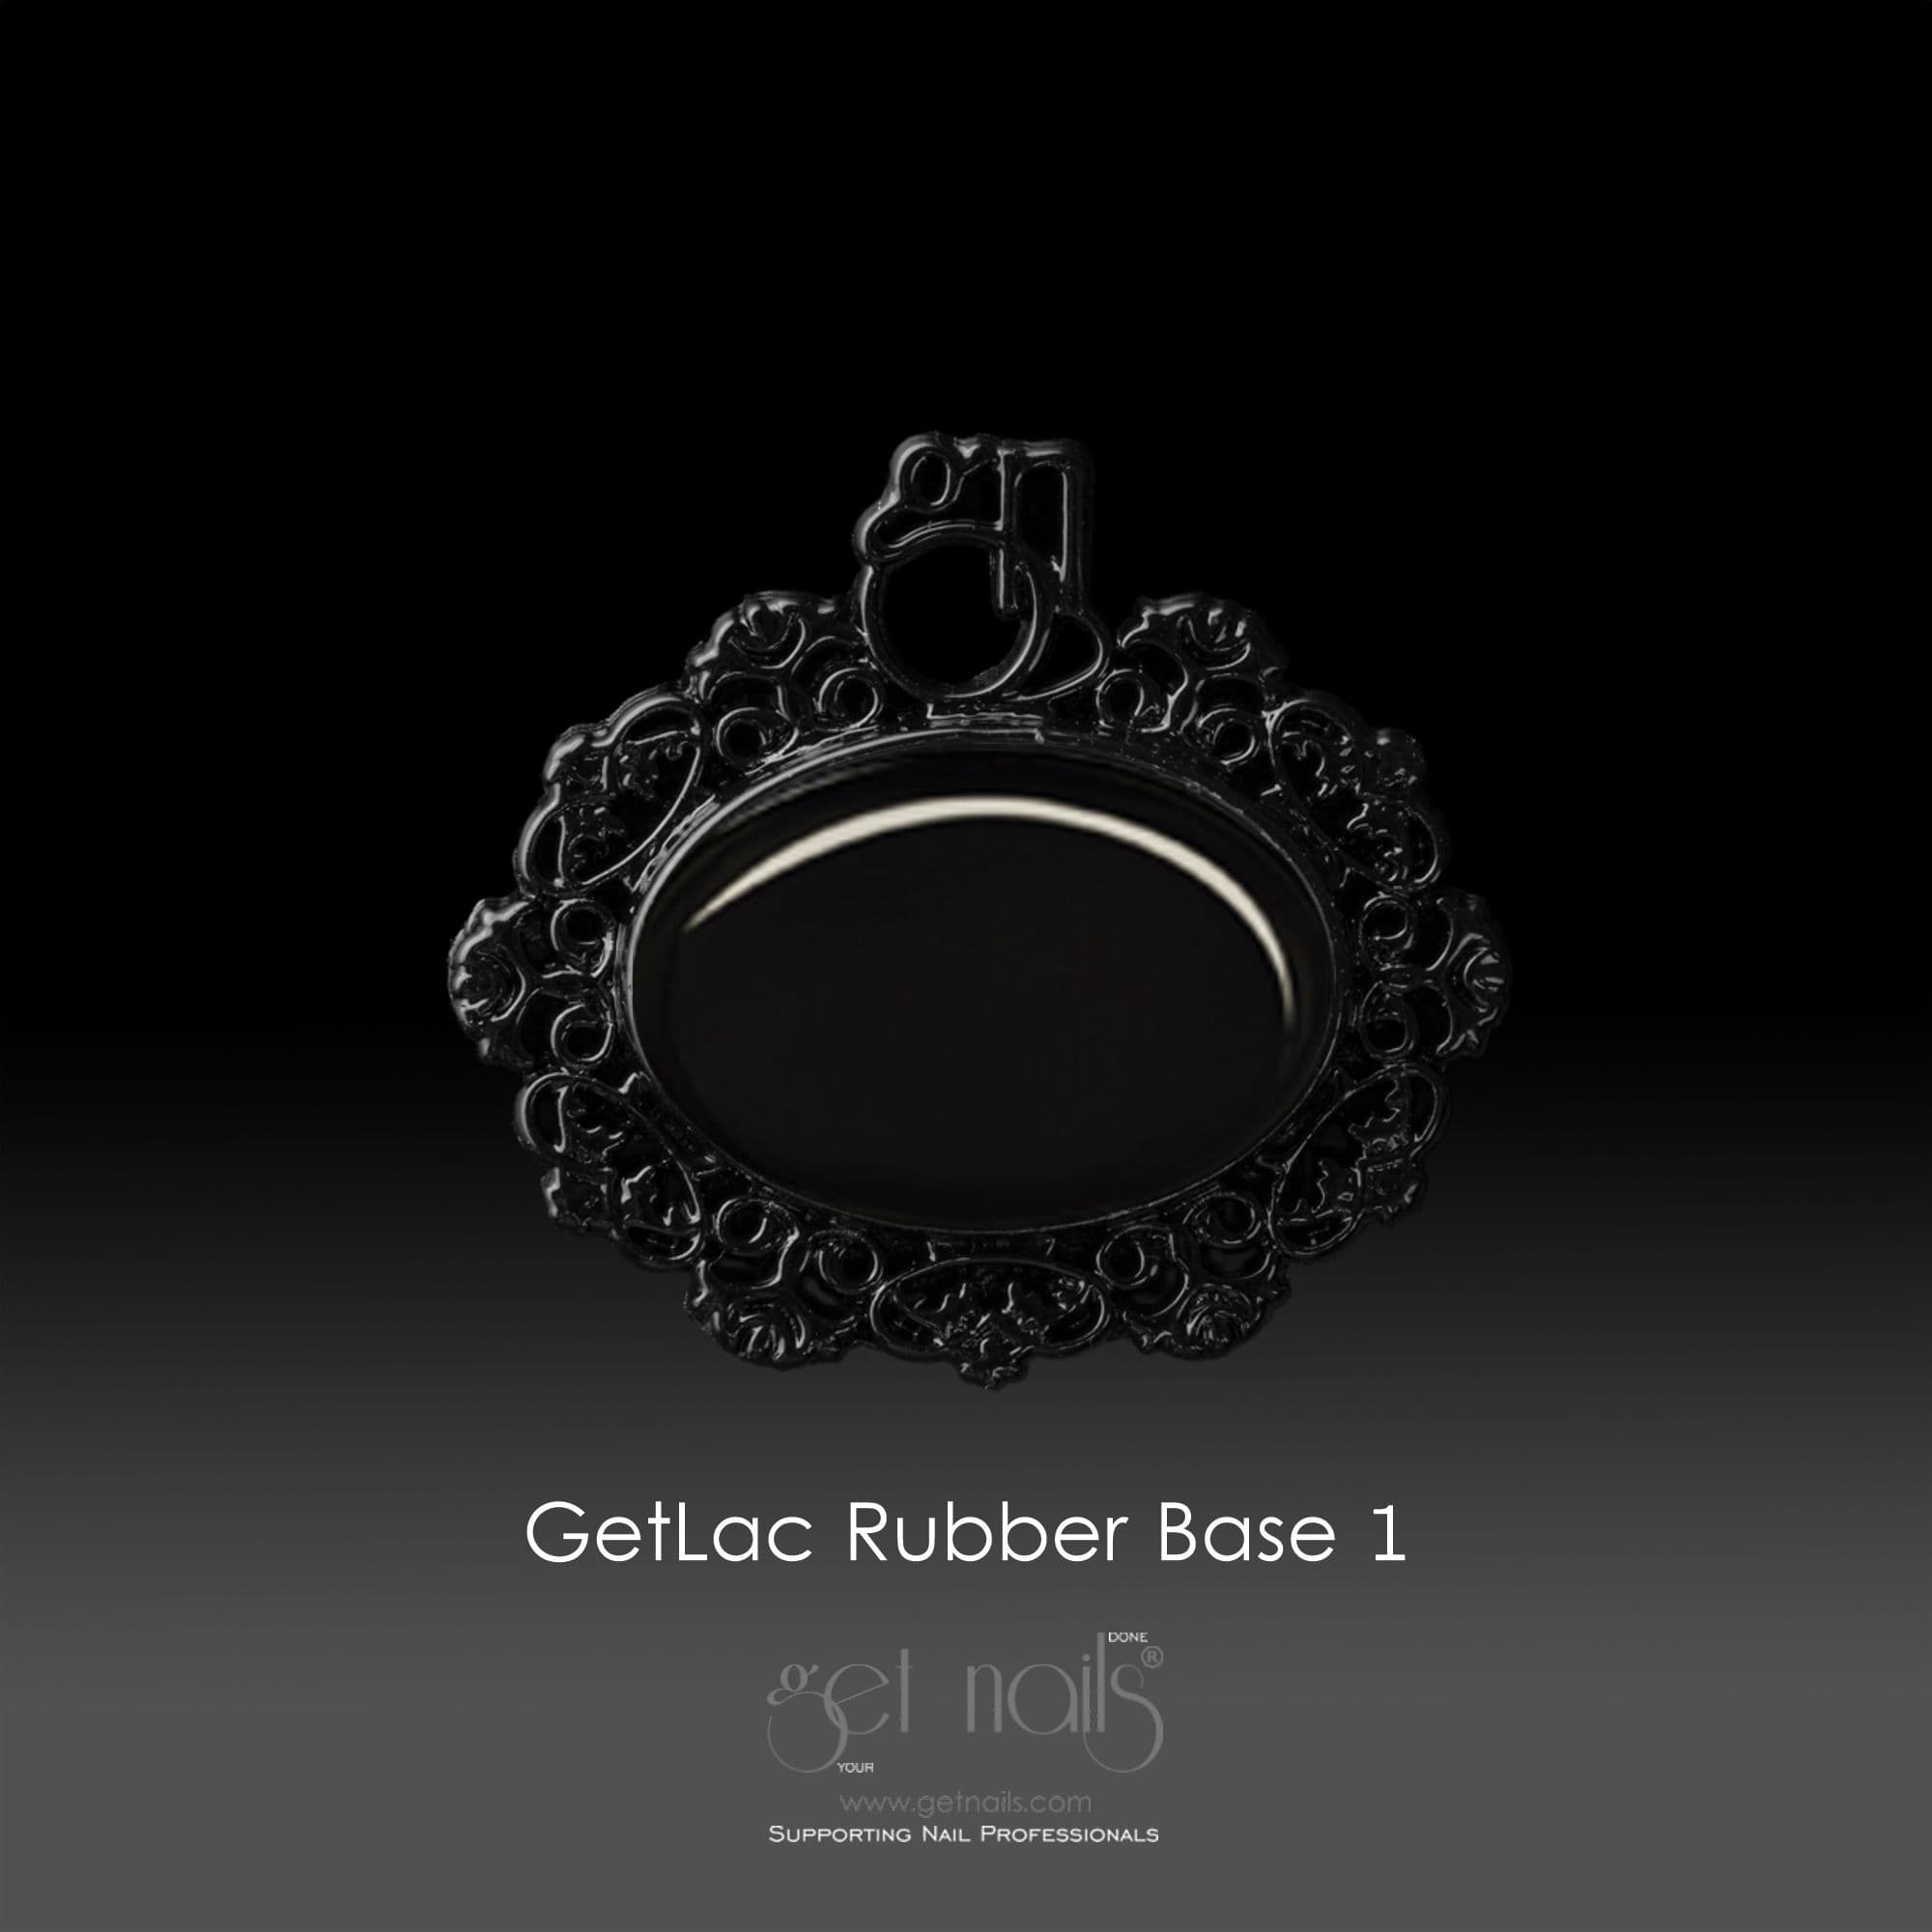 Get Nails Austria - GetLac Rubber Base 1 15g